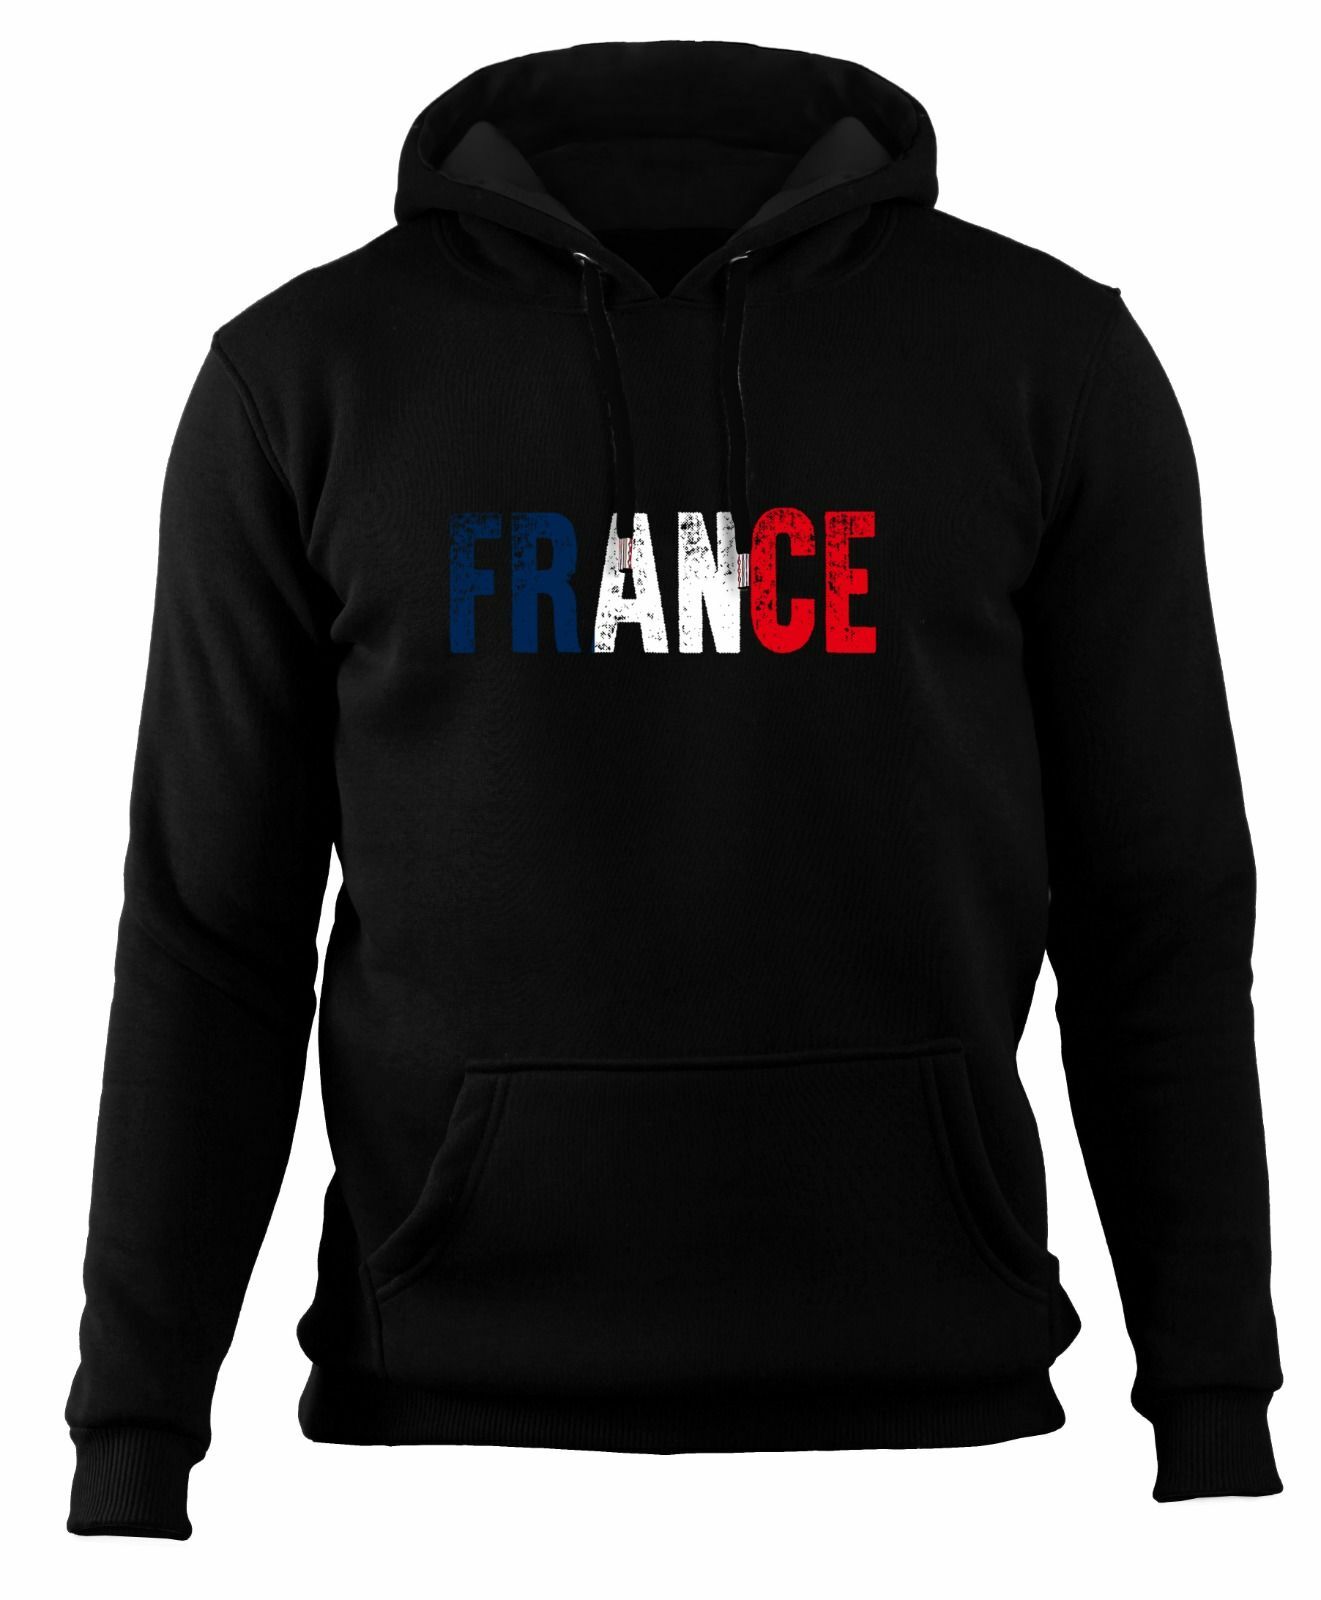 France (Fransa) - Flag Sweatshirt